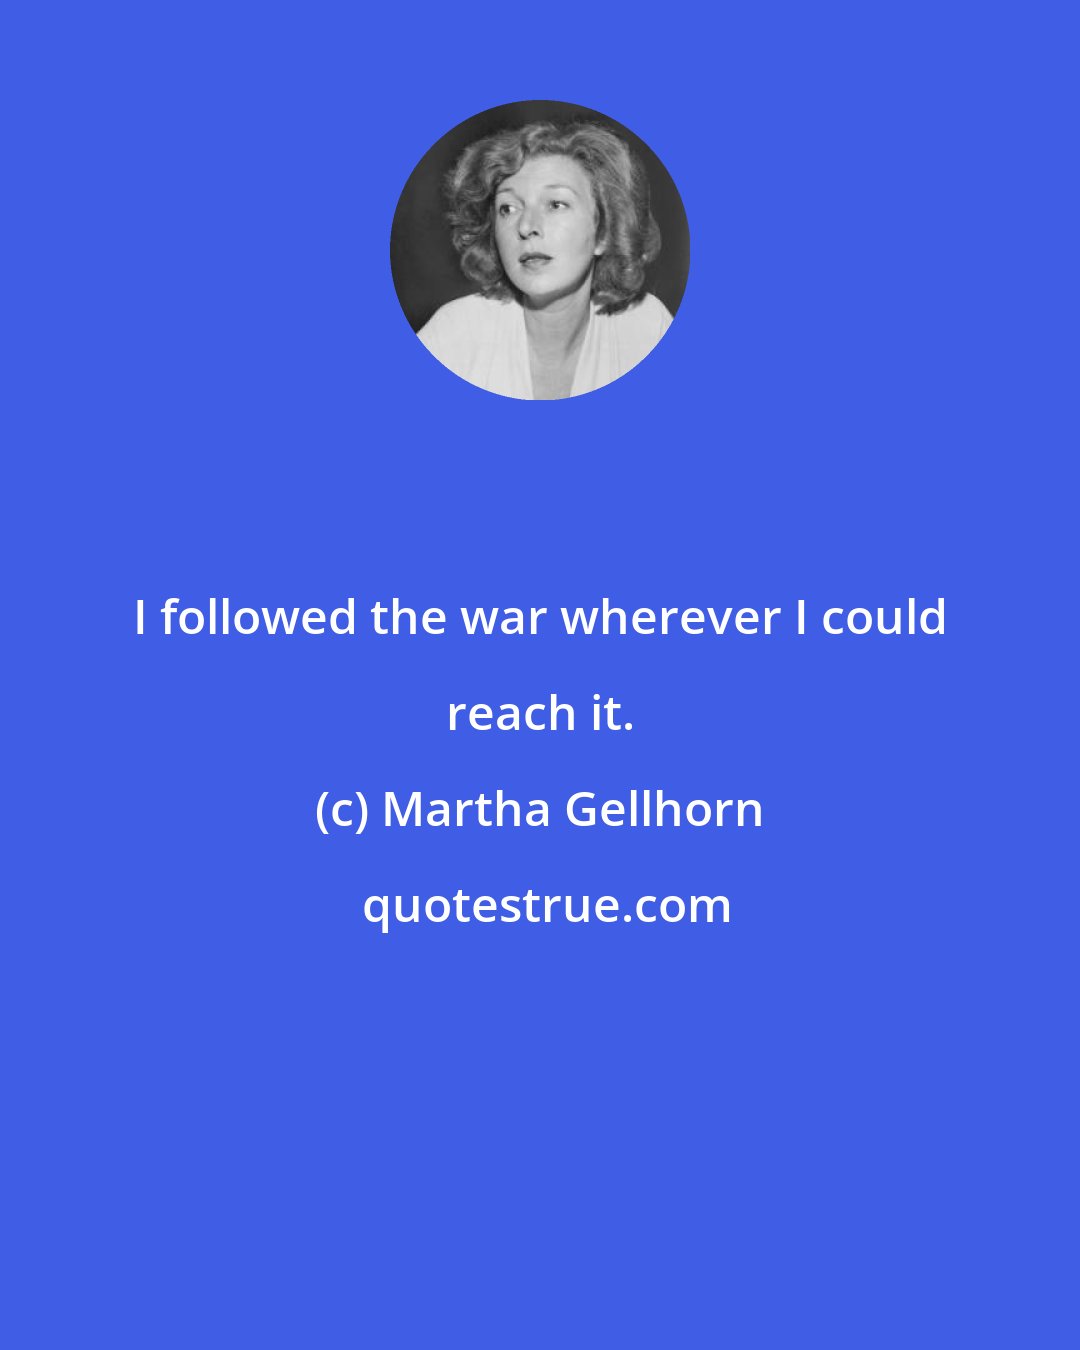 Martha Gellhorn: I followed the war wherever I could reach it.